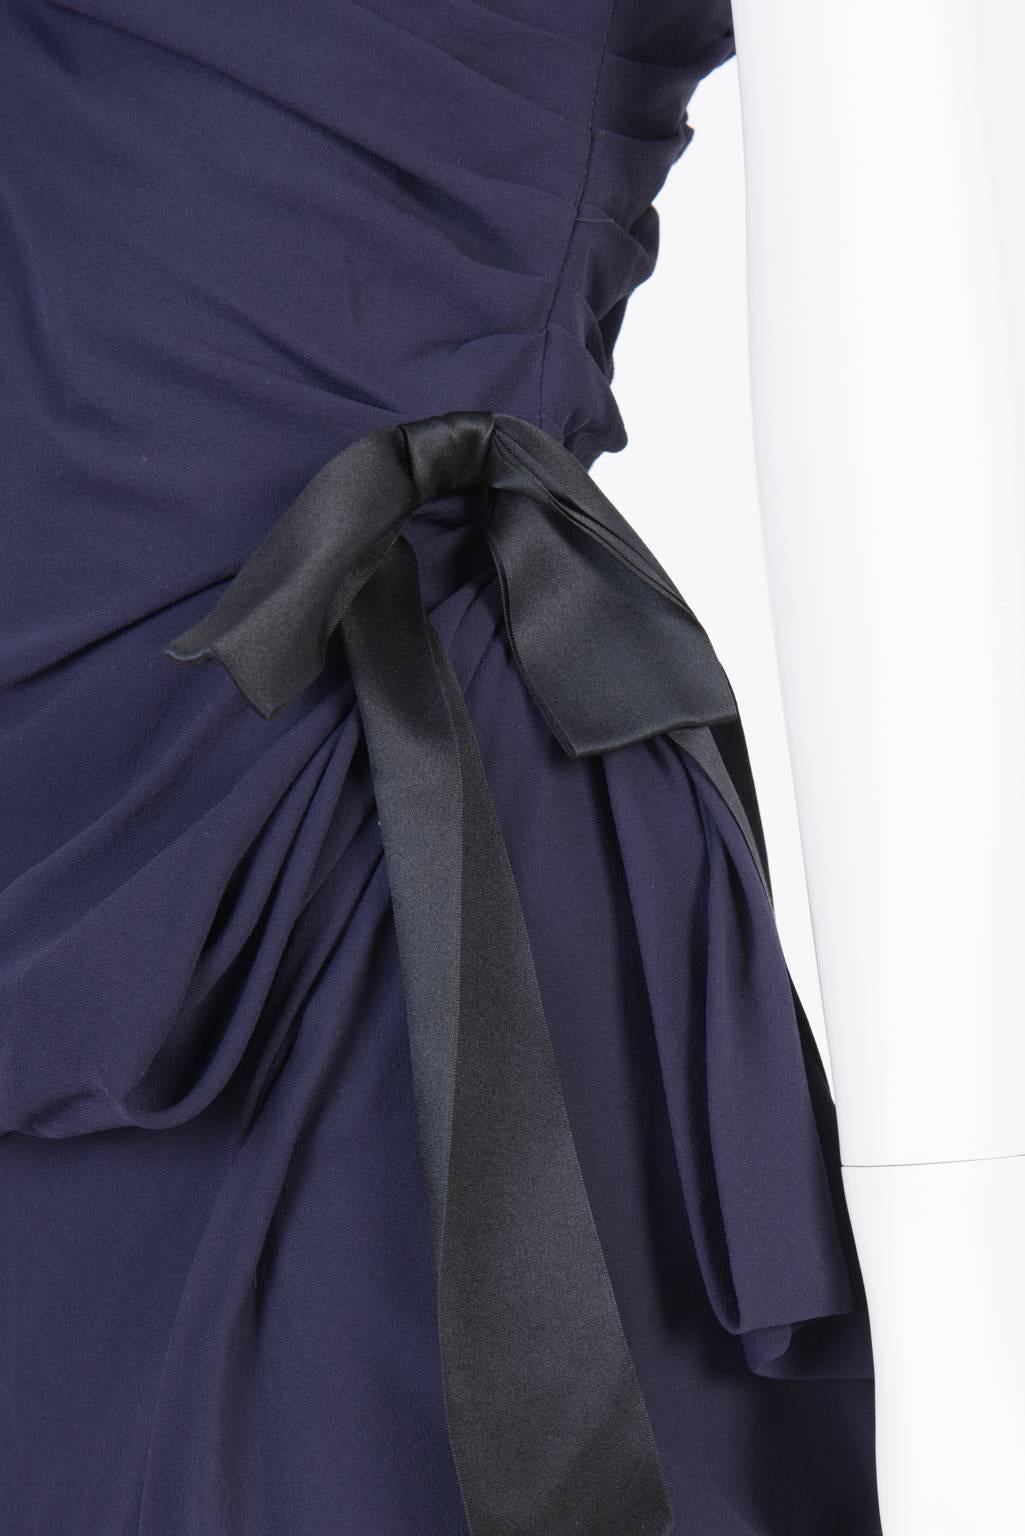 Nina Ricci Purple Asymetrical Silk Dress For Sale 1